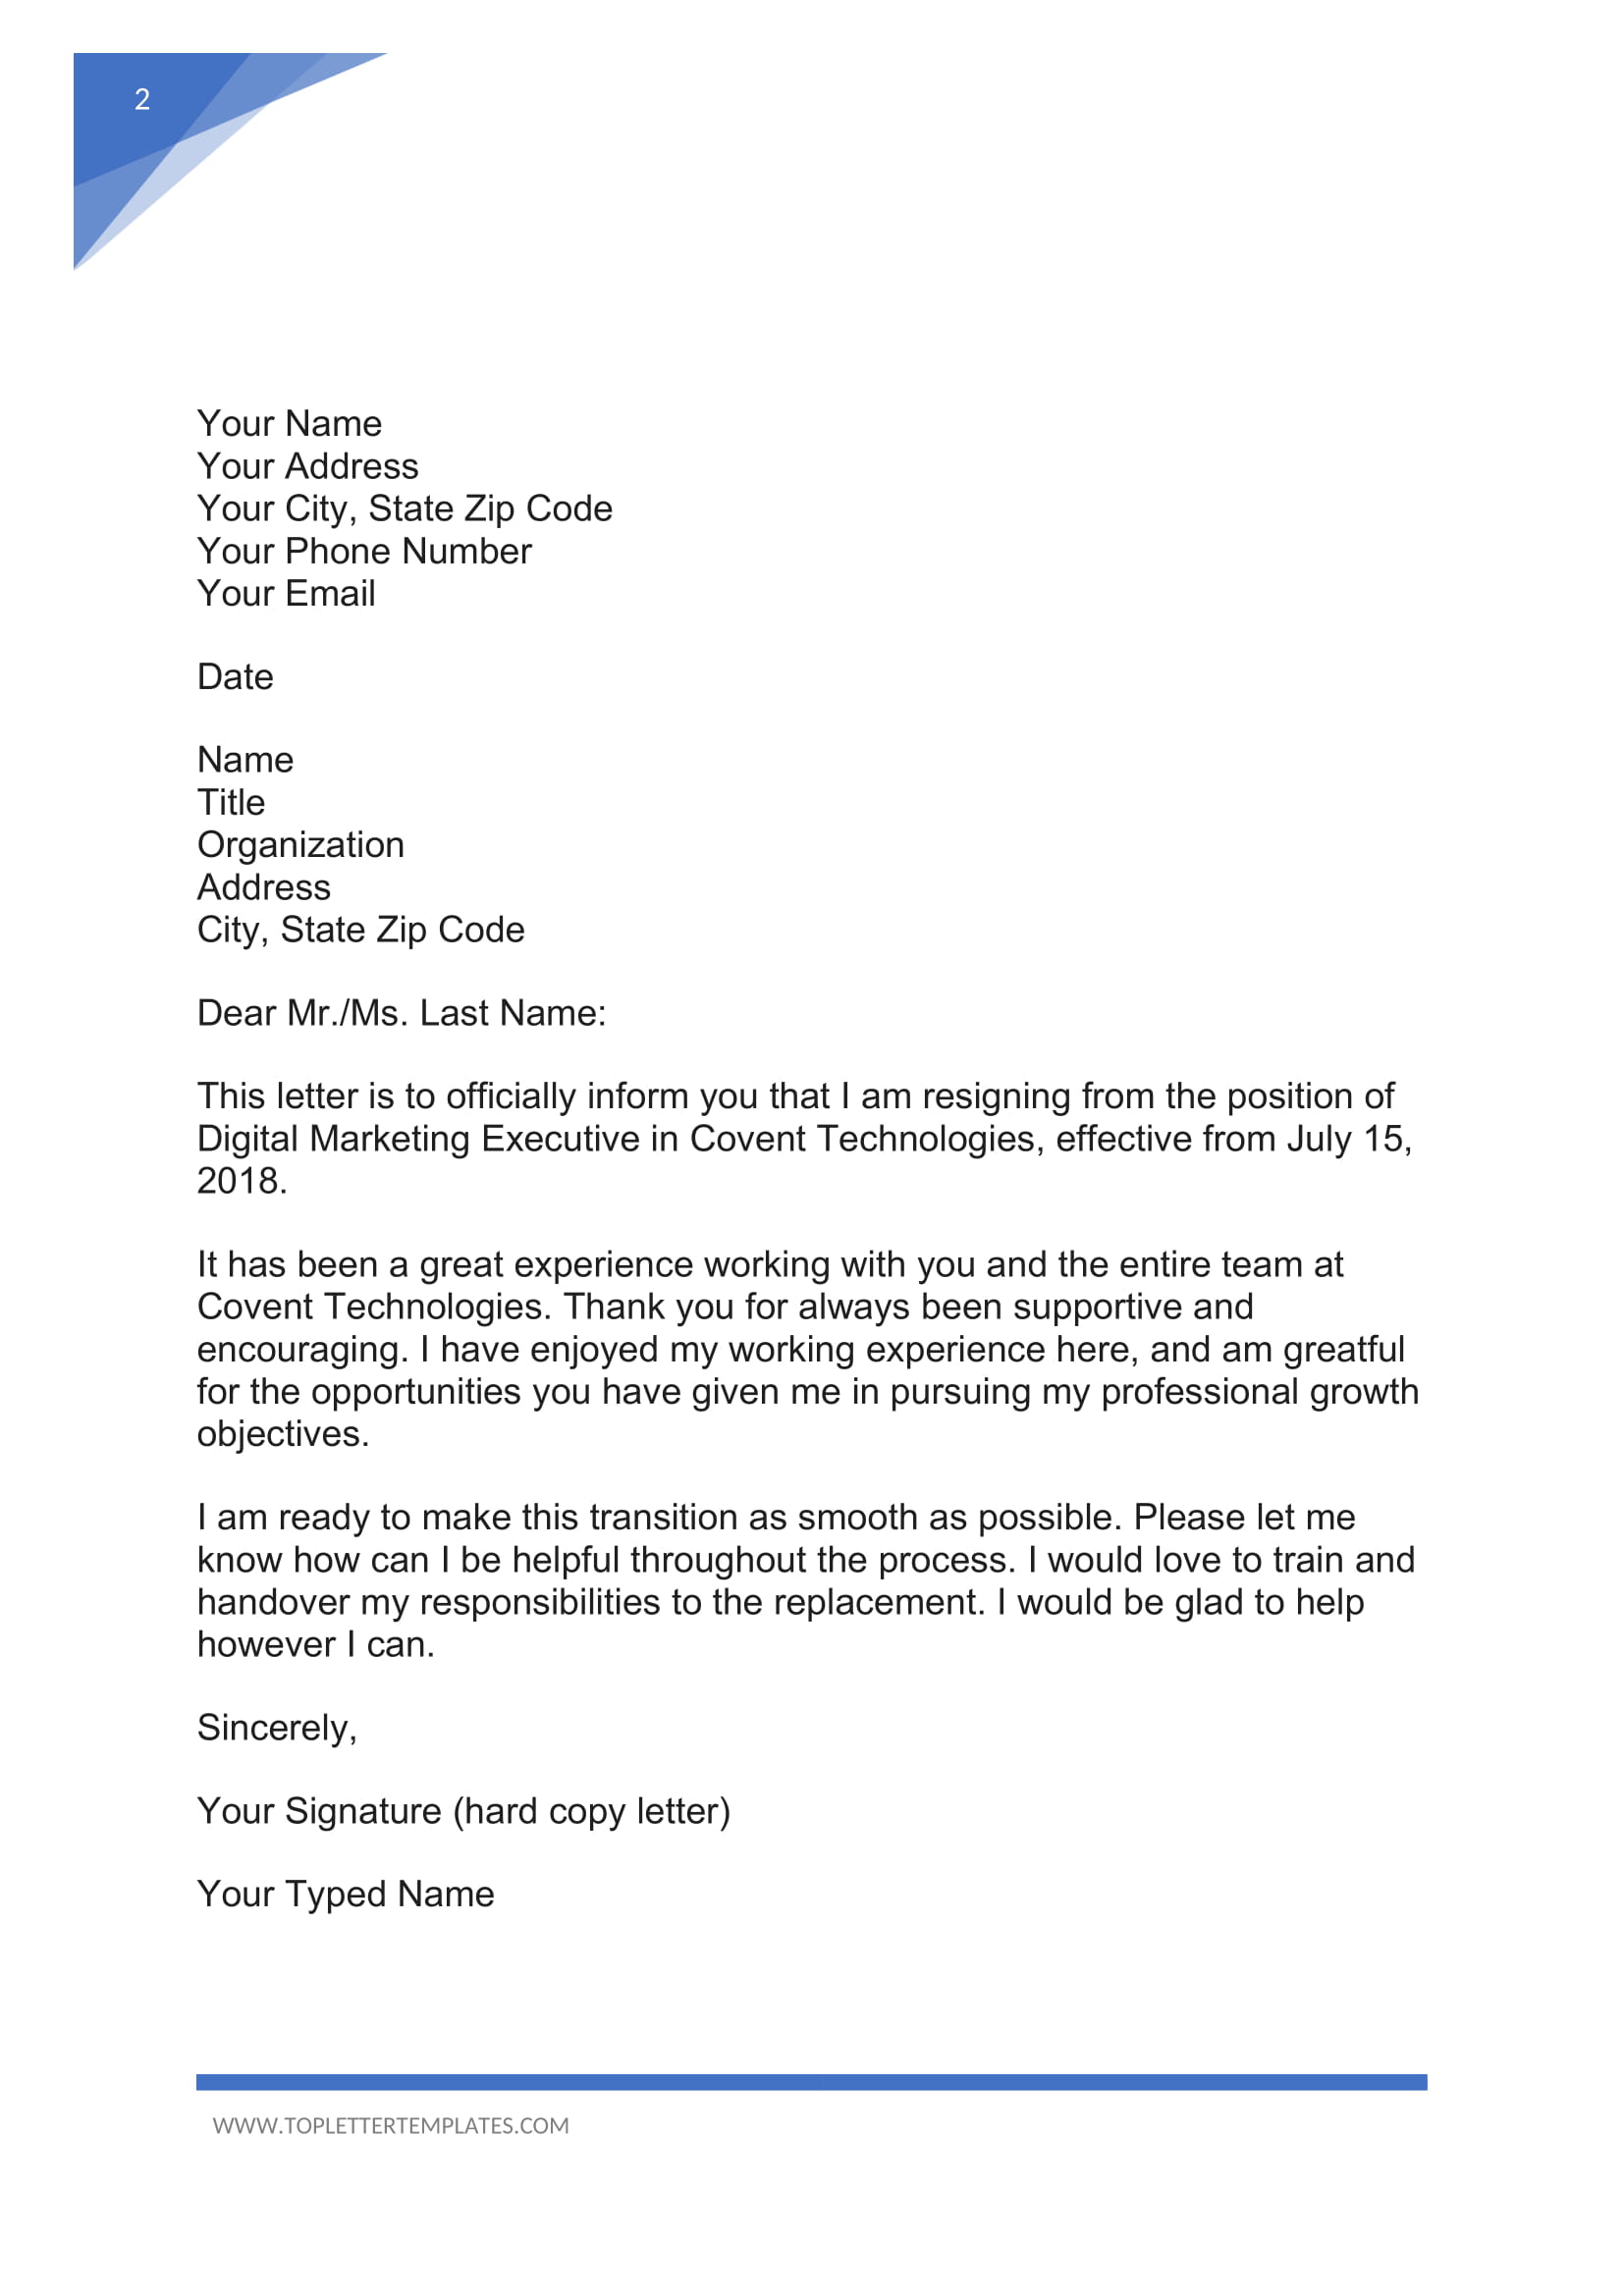 Formal Resignation Letter Doc from toplettertemplates.com